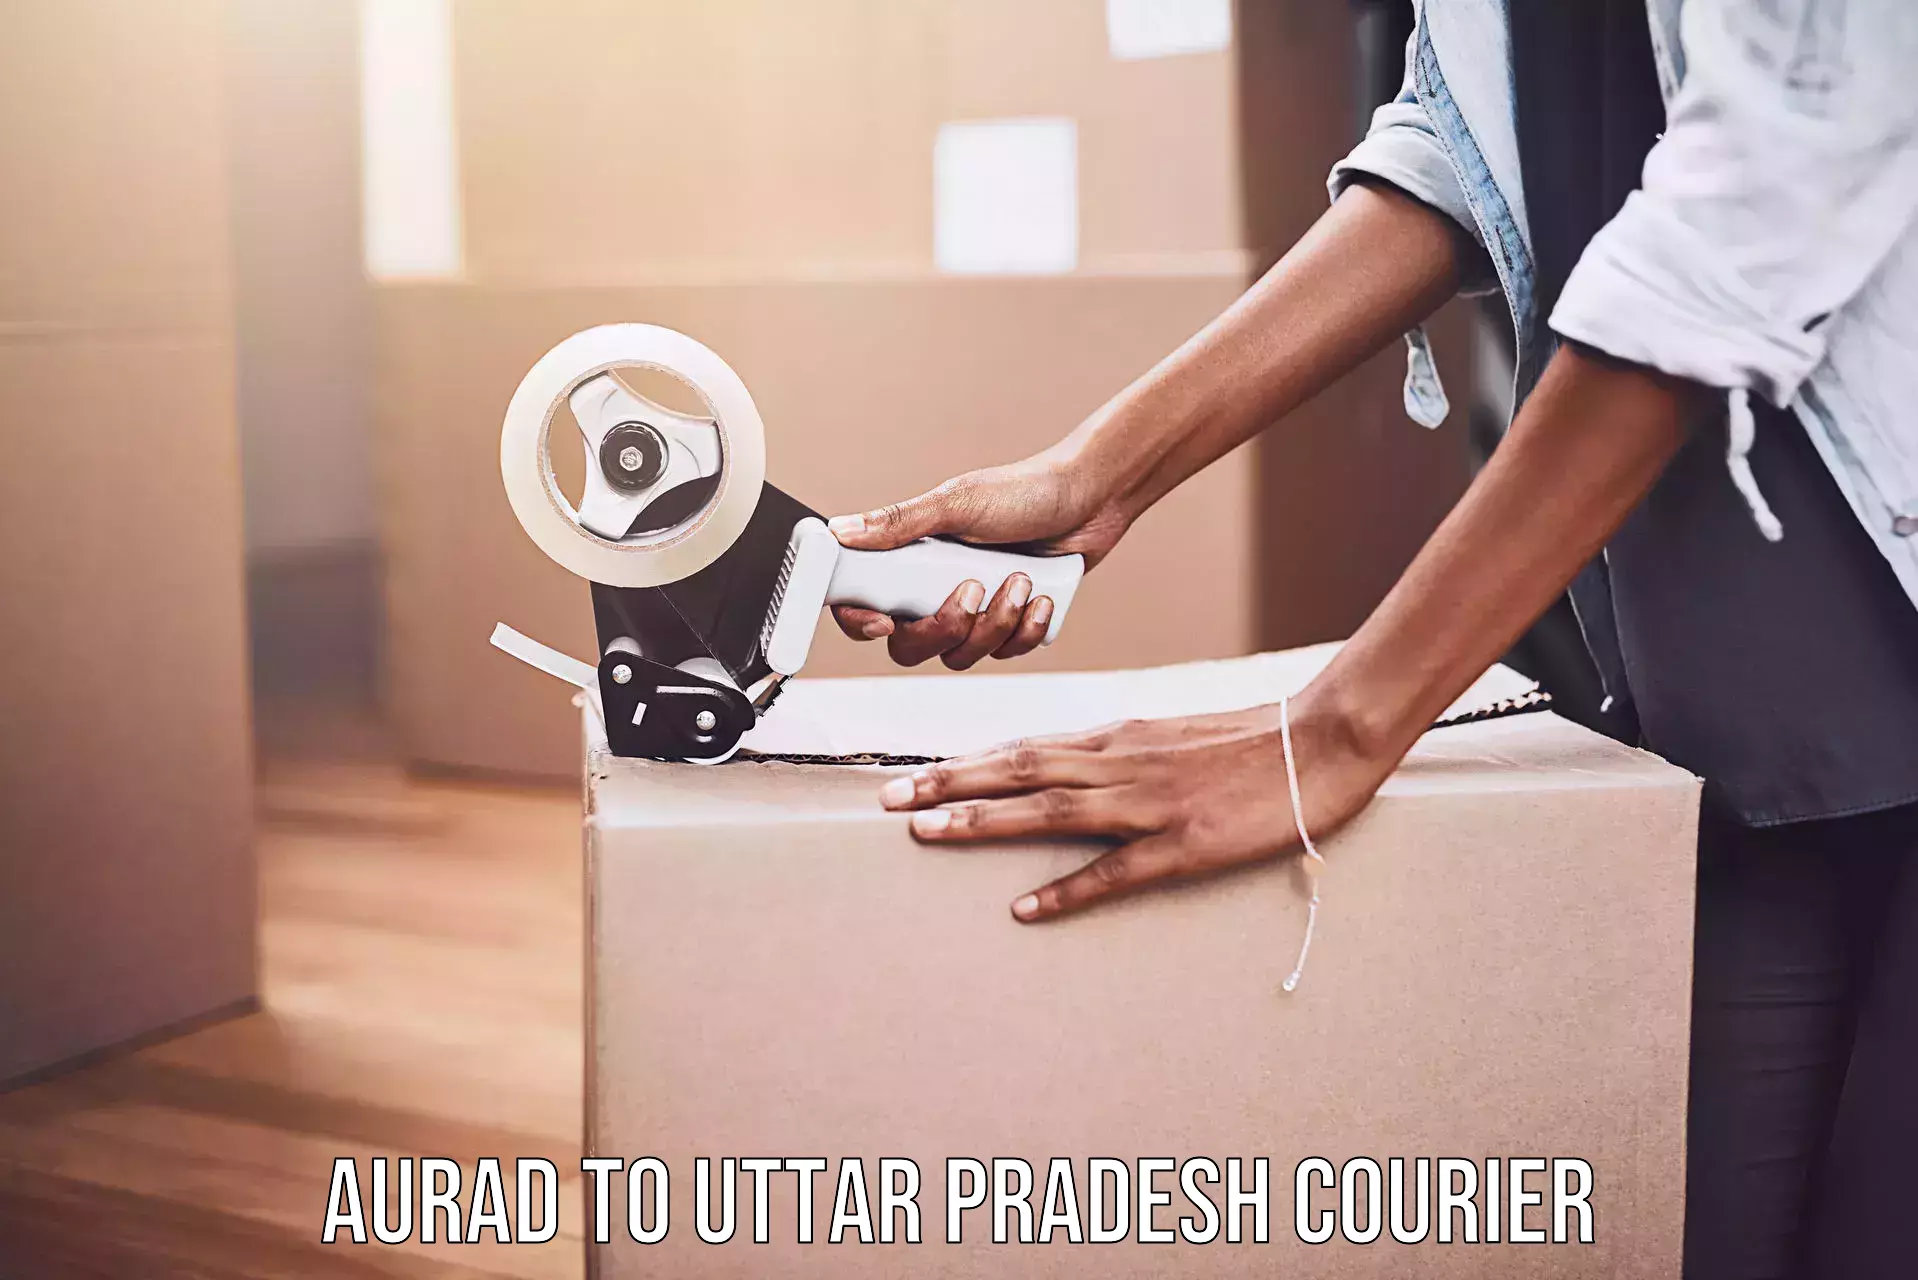 Pharmaceutical courier Aurad to Uttar Pradesh